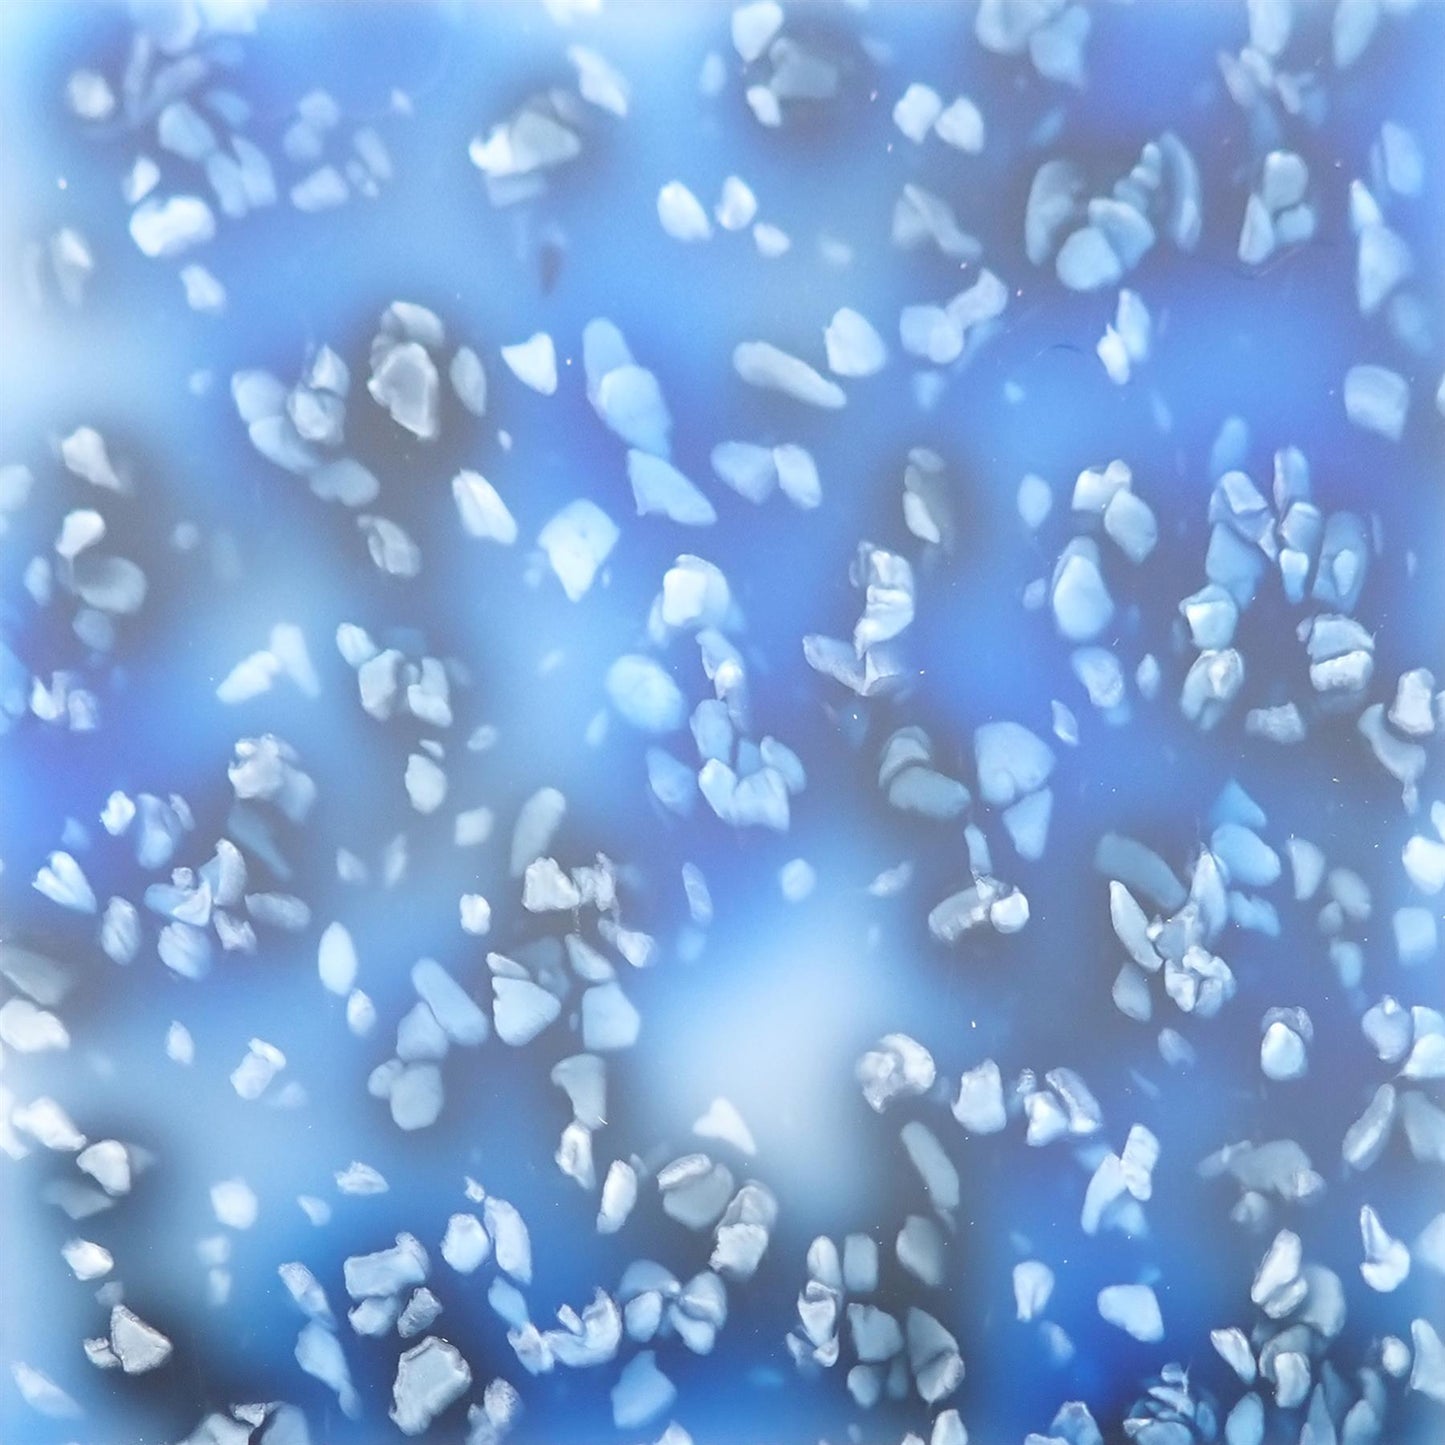 Incudo Blue Crystal Acrylic Sheet - 300x200x3mm (11.8x7.87x0.12")